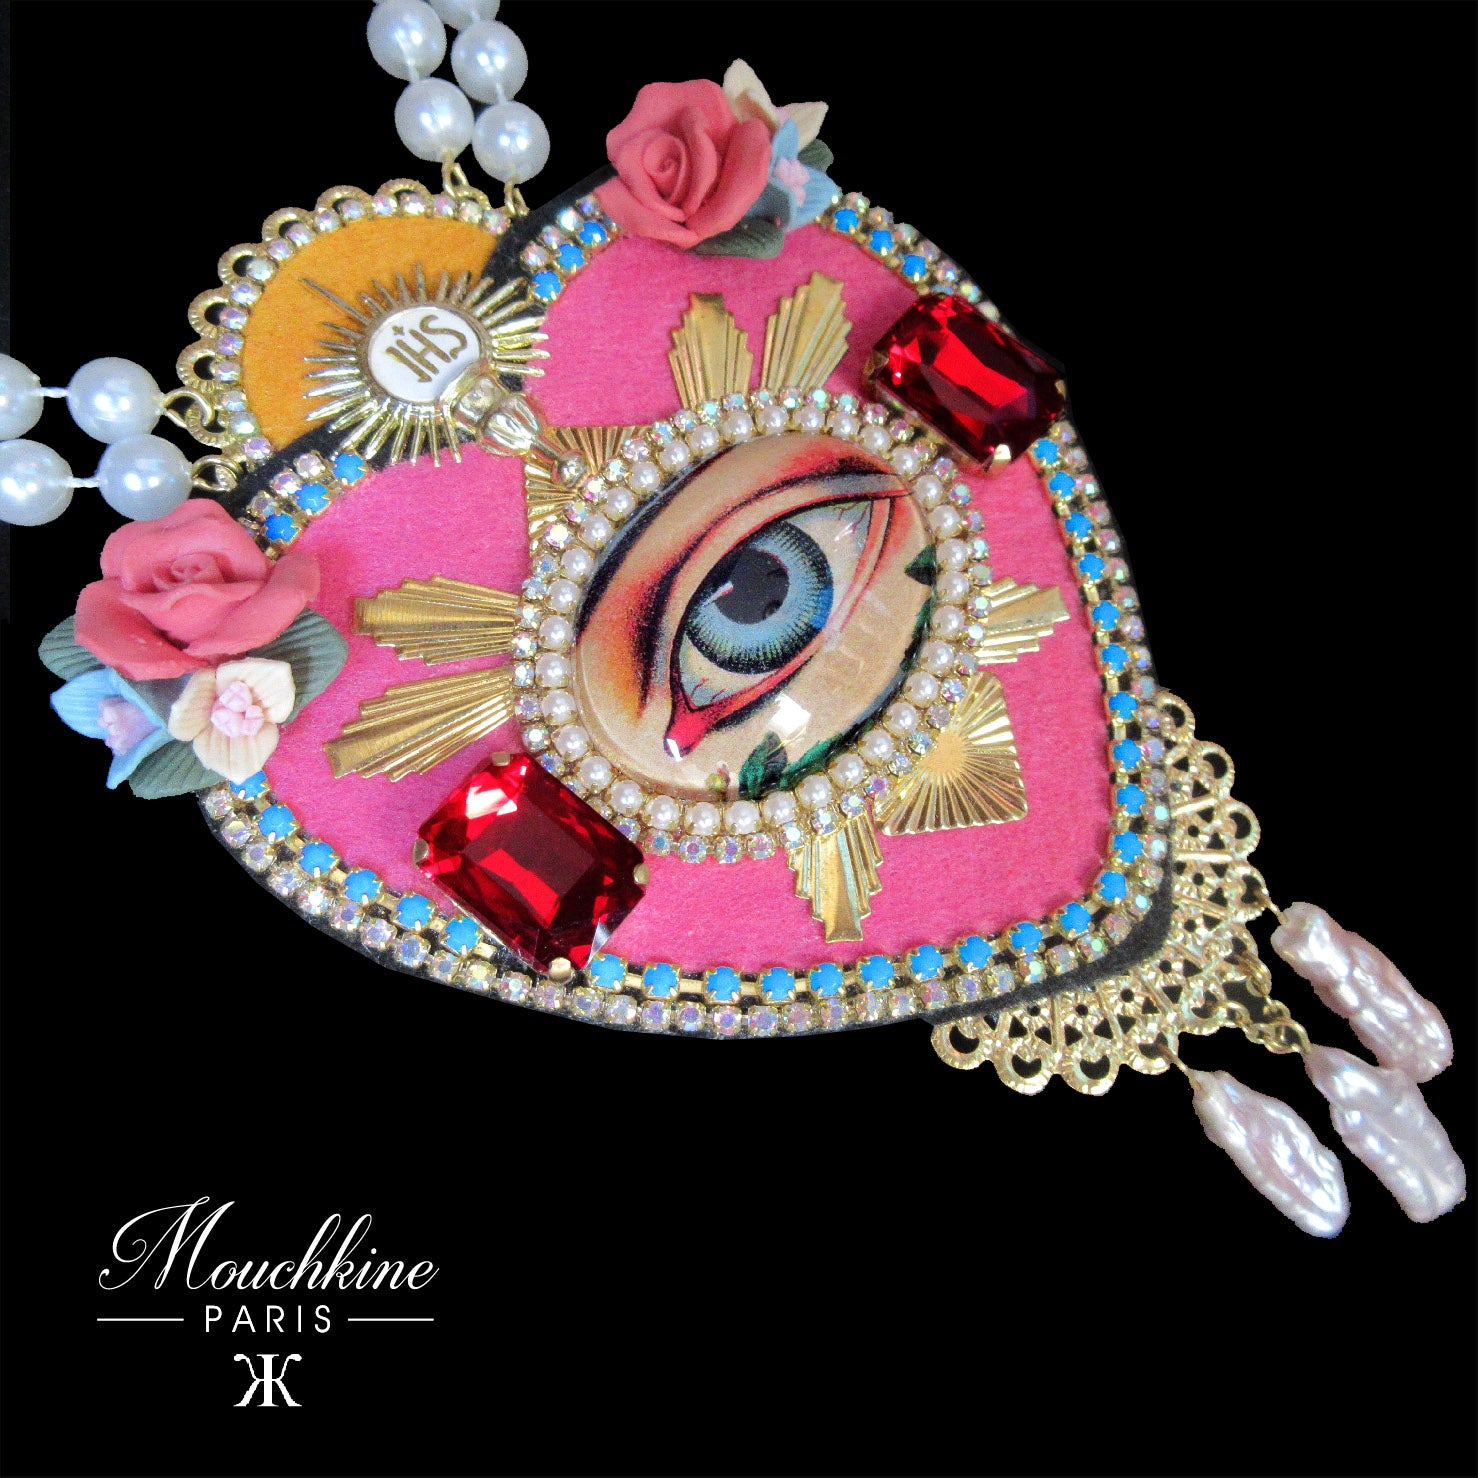 mouchkine jewelry paris luxury handmade pink heart necklace